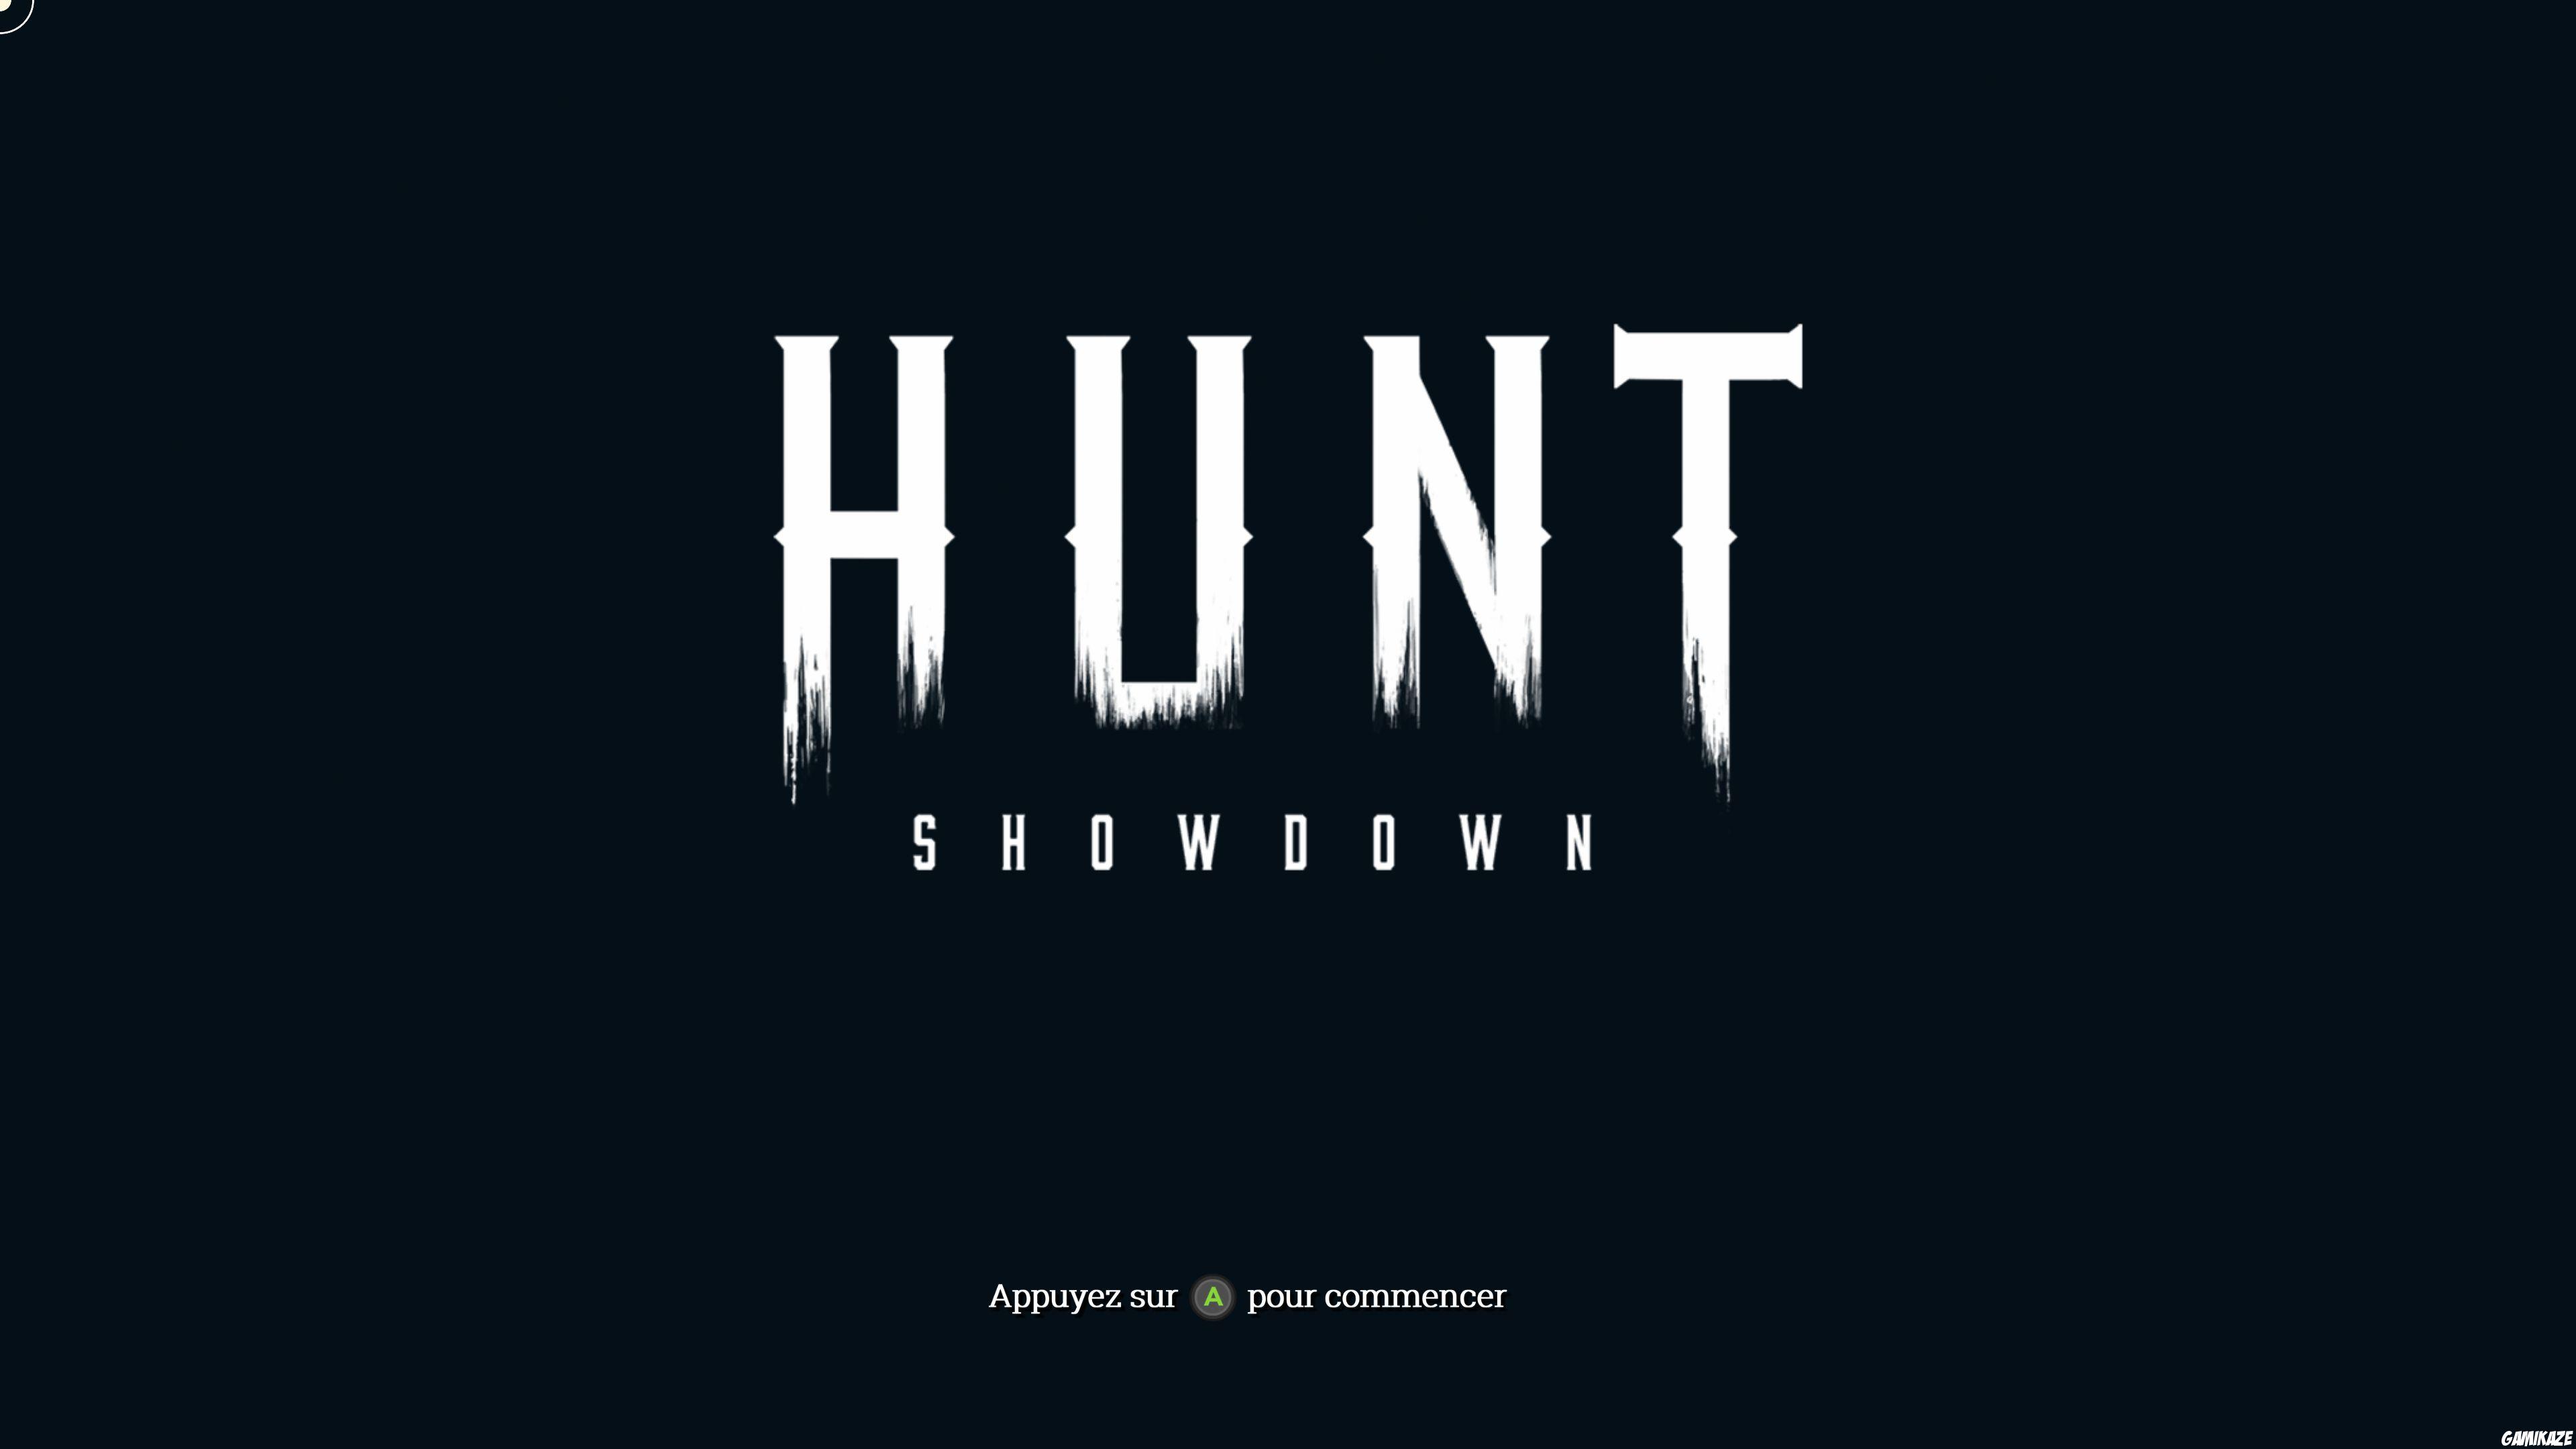 xone - Hunt  Showdown 